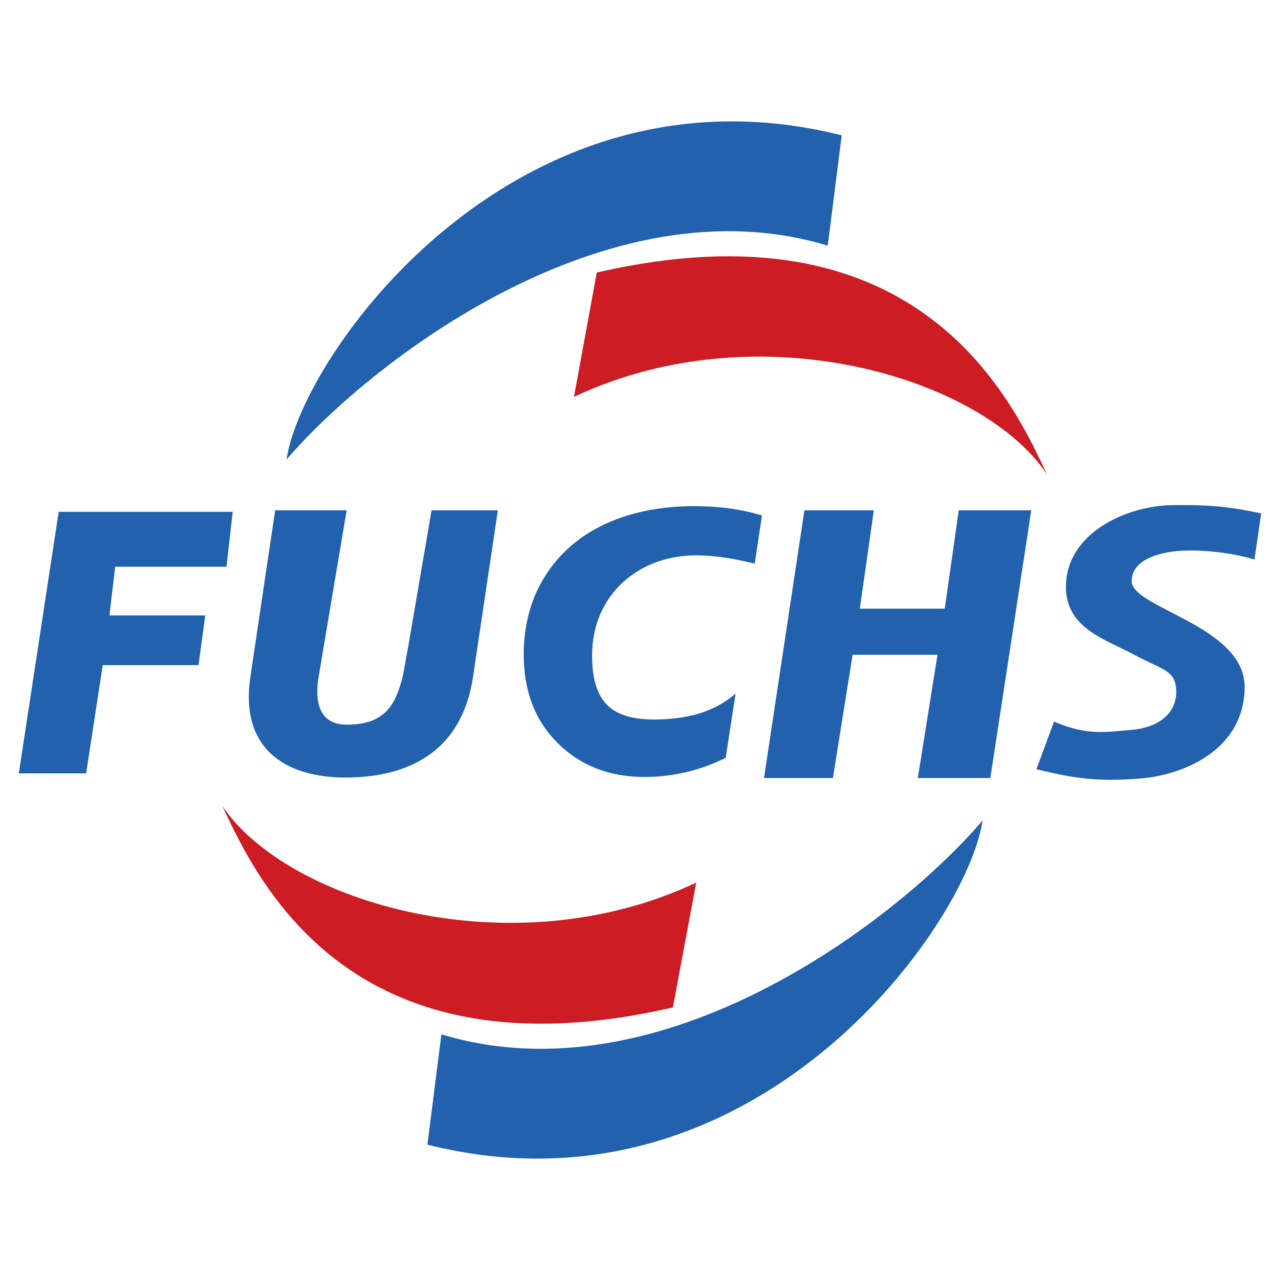 Fuchs Maintain Fricofin V - G13 Coolant - Pink / Violet 1 Liter – New  German Performance